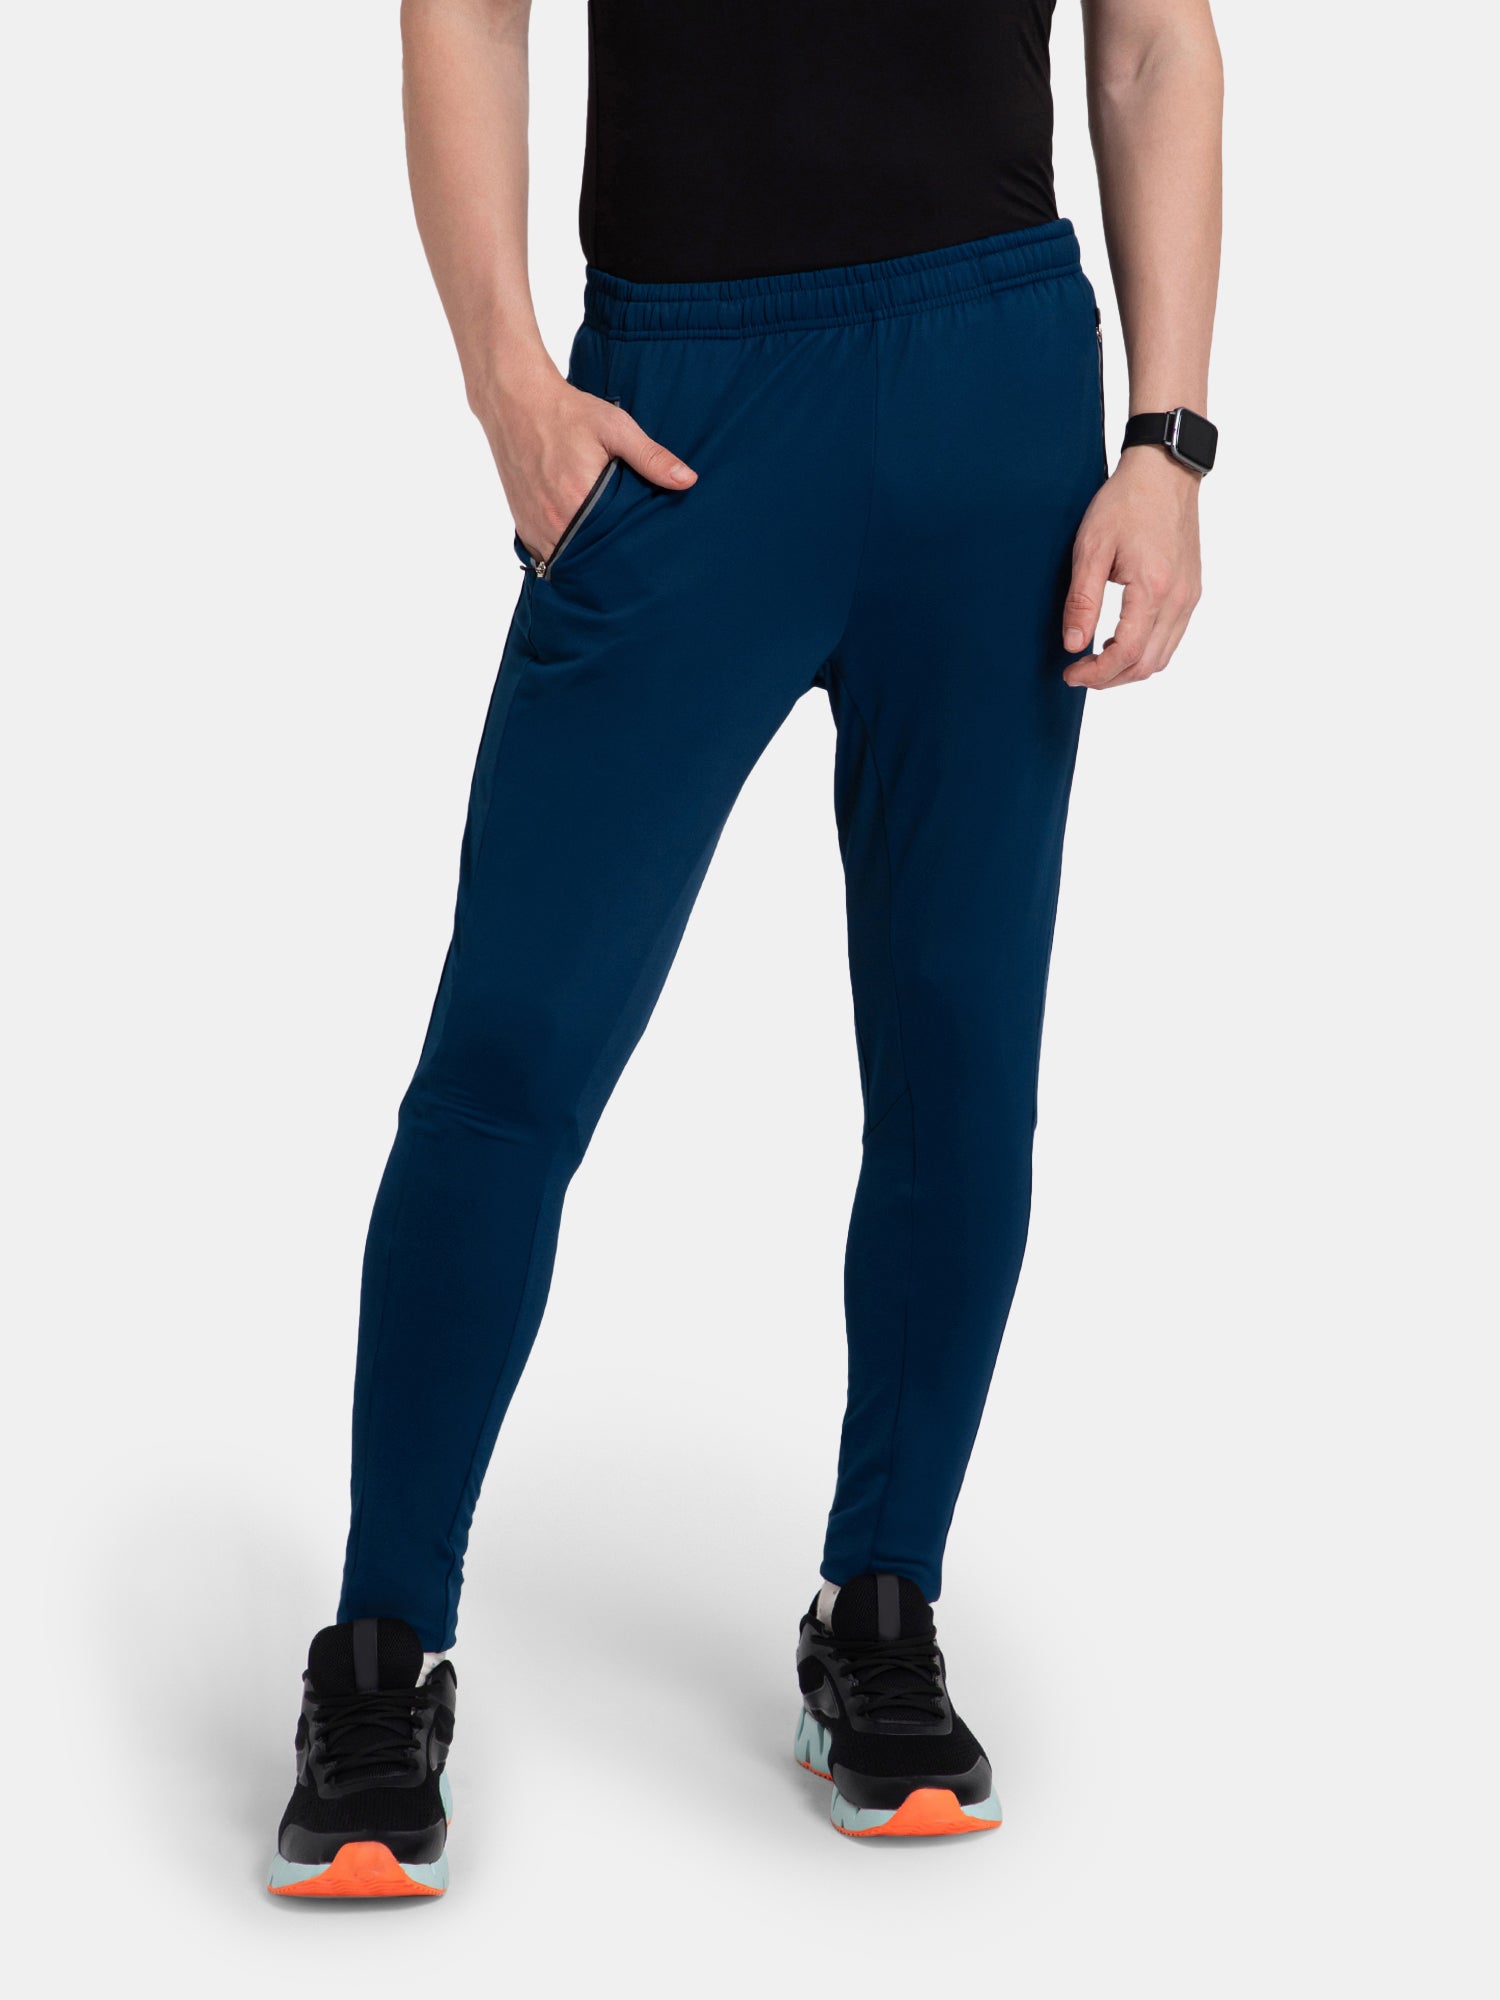 Van Heusen Innerwear Track Pants, Men Blue Solid Regular Fit Casual Track  Pants for Athleisure at Vanheusenindia.abfrl.in